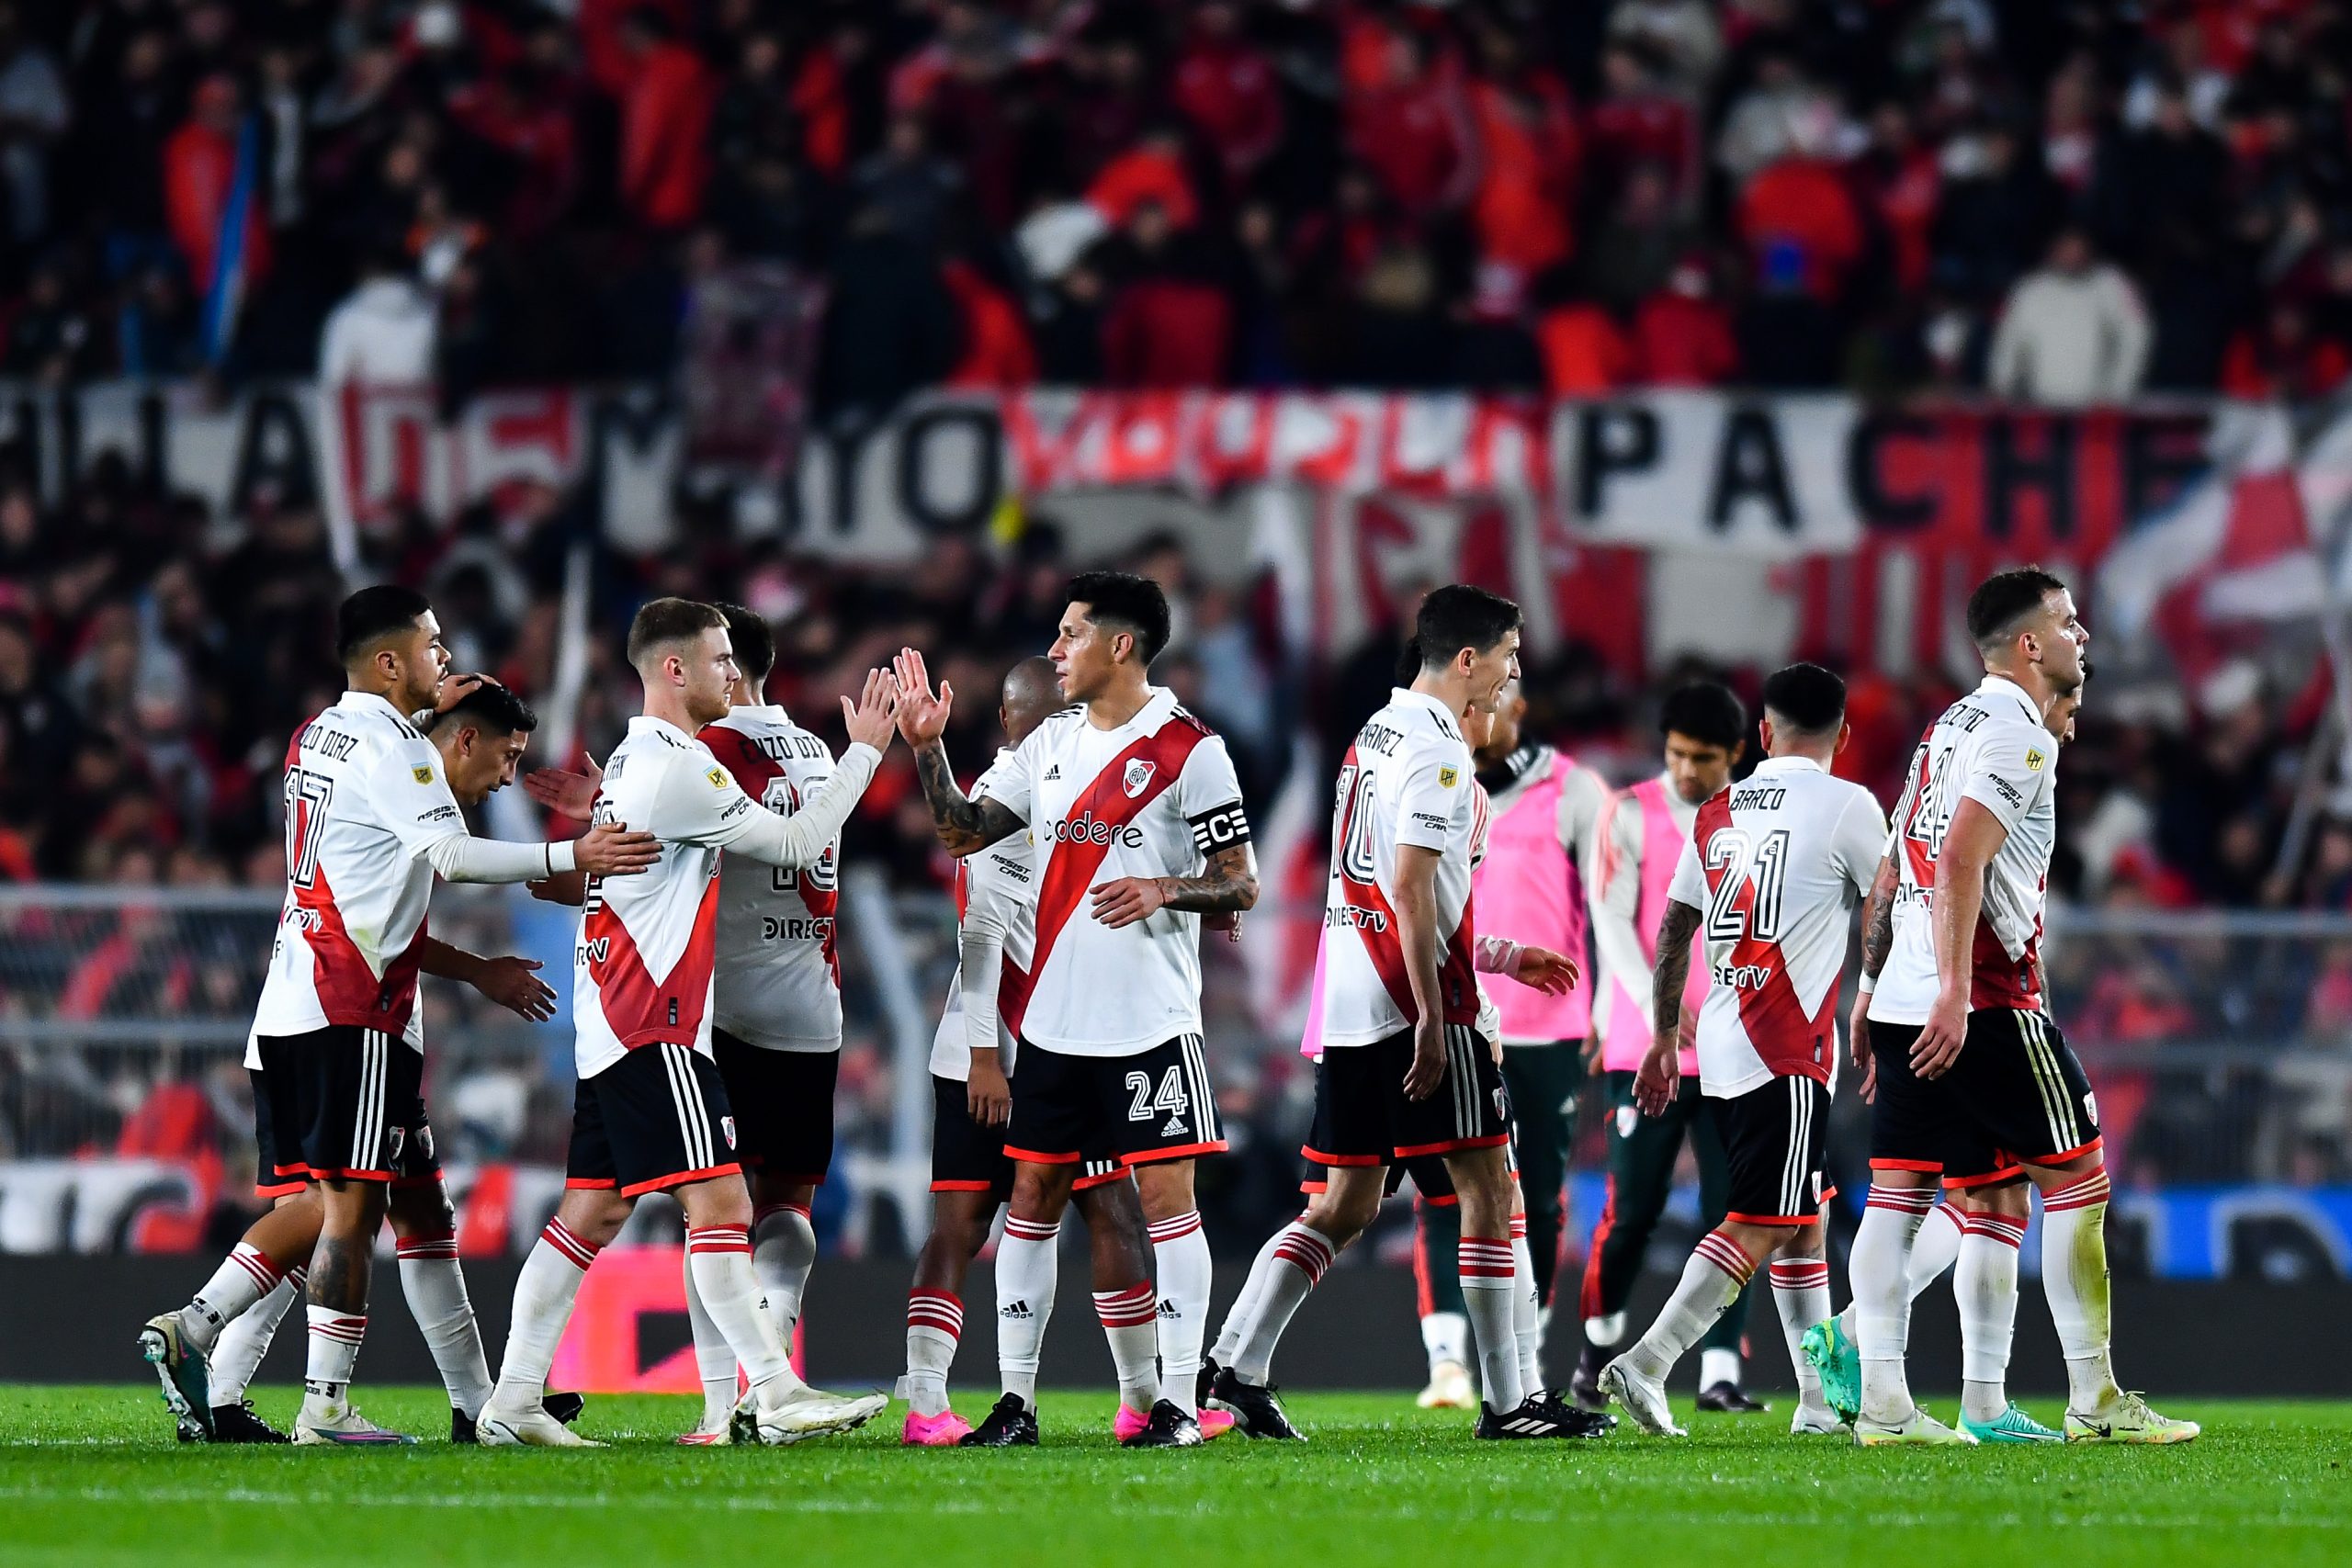 Jogadores do River Plate comemoram título (Foto: Marcelo Endelli/Getty Images)